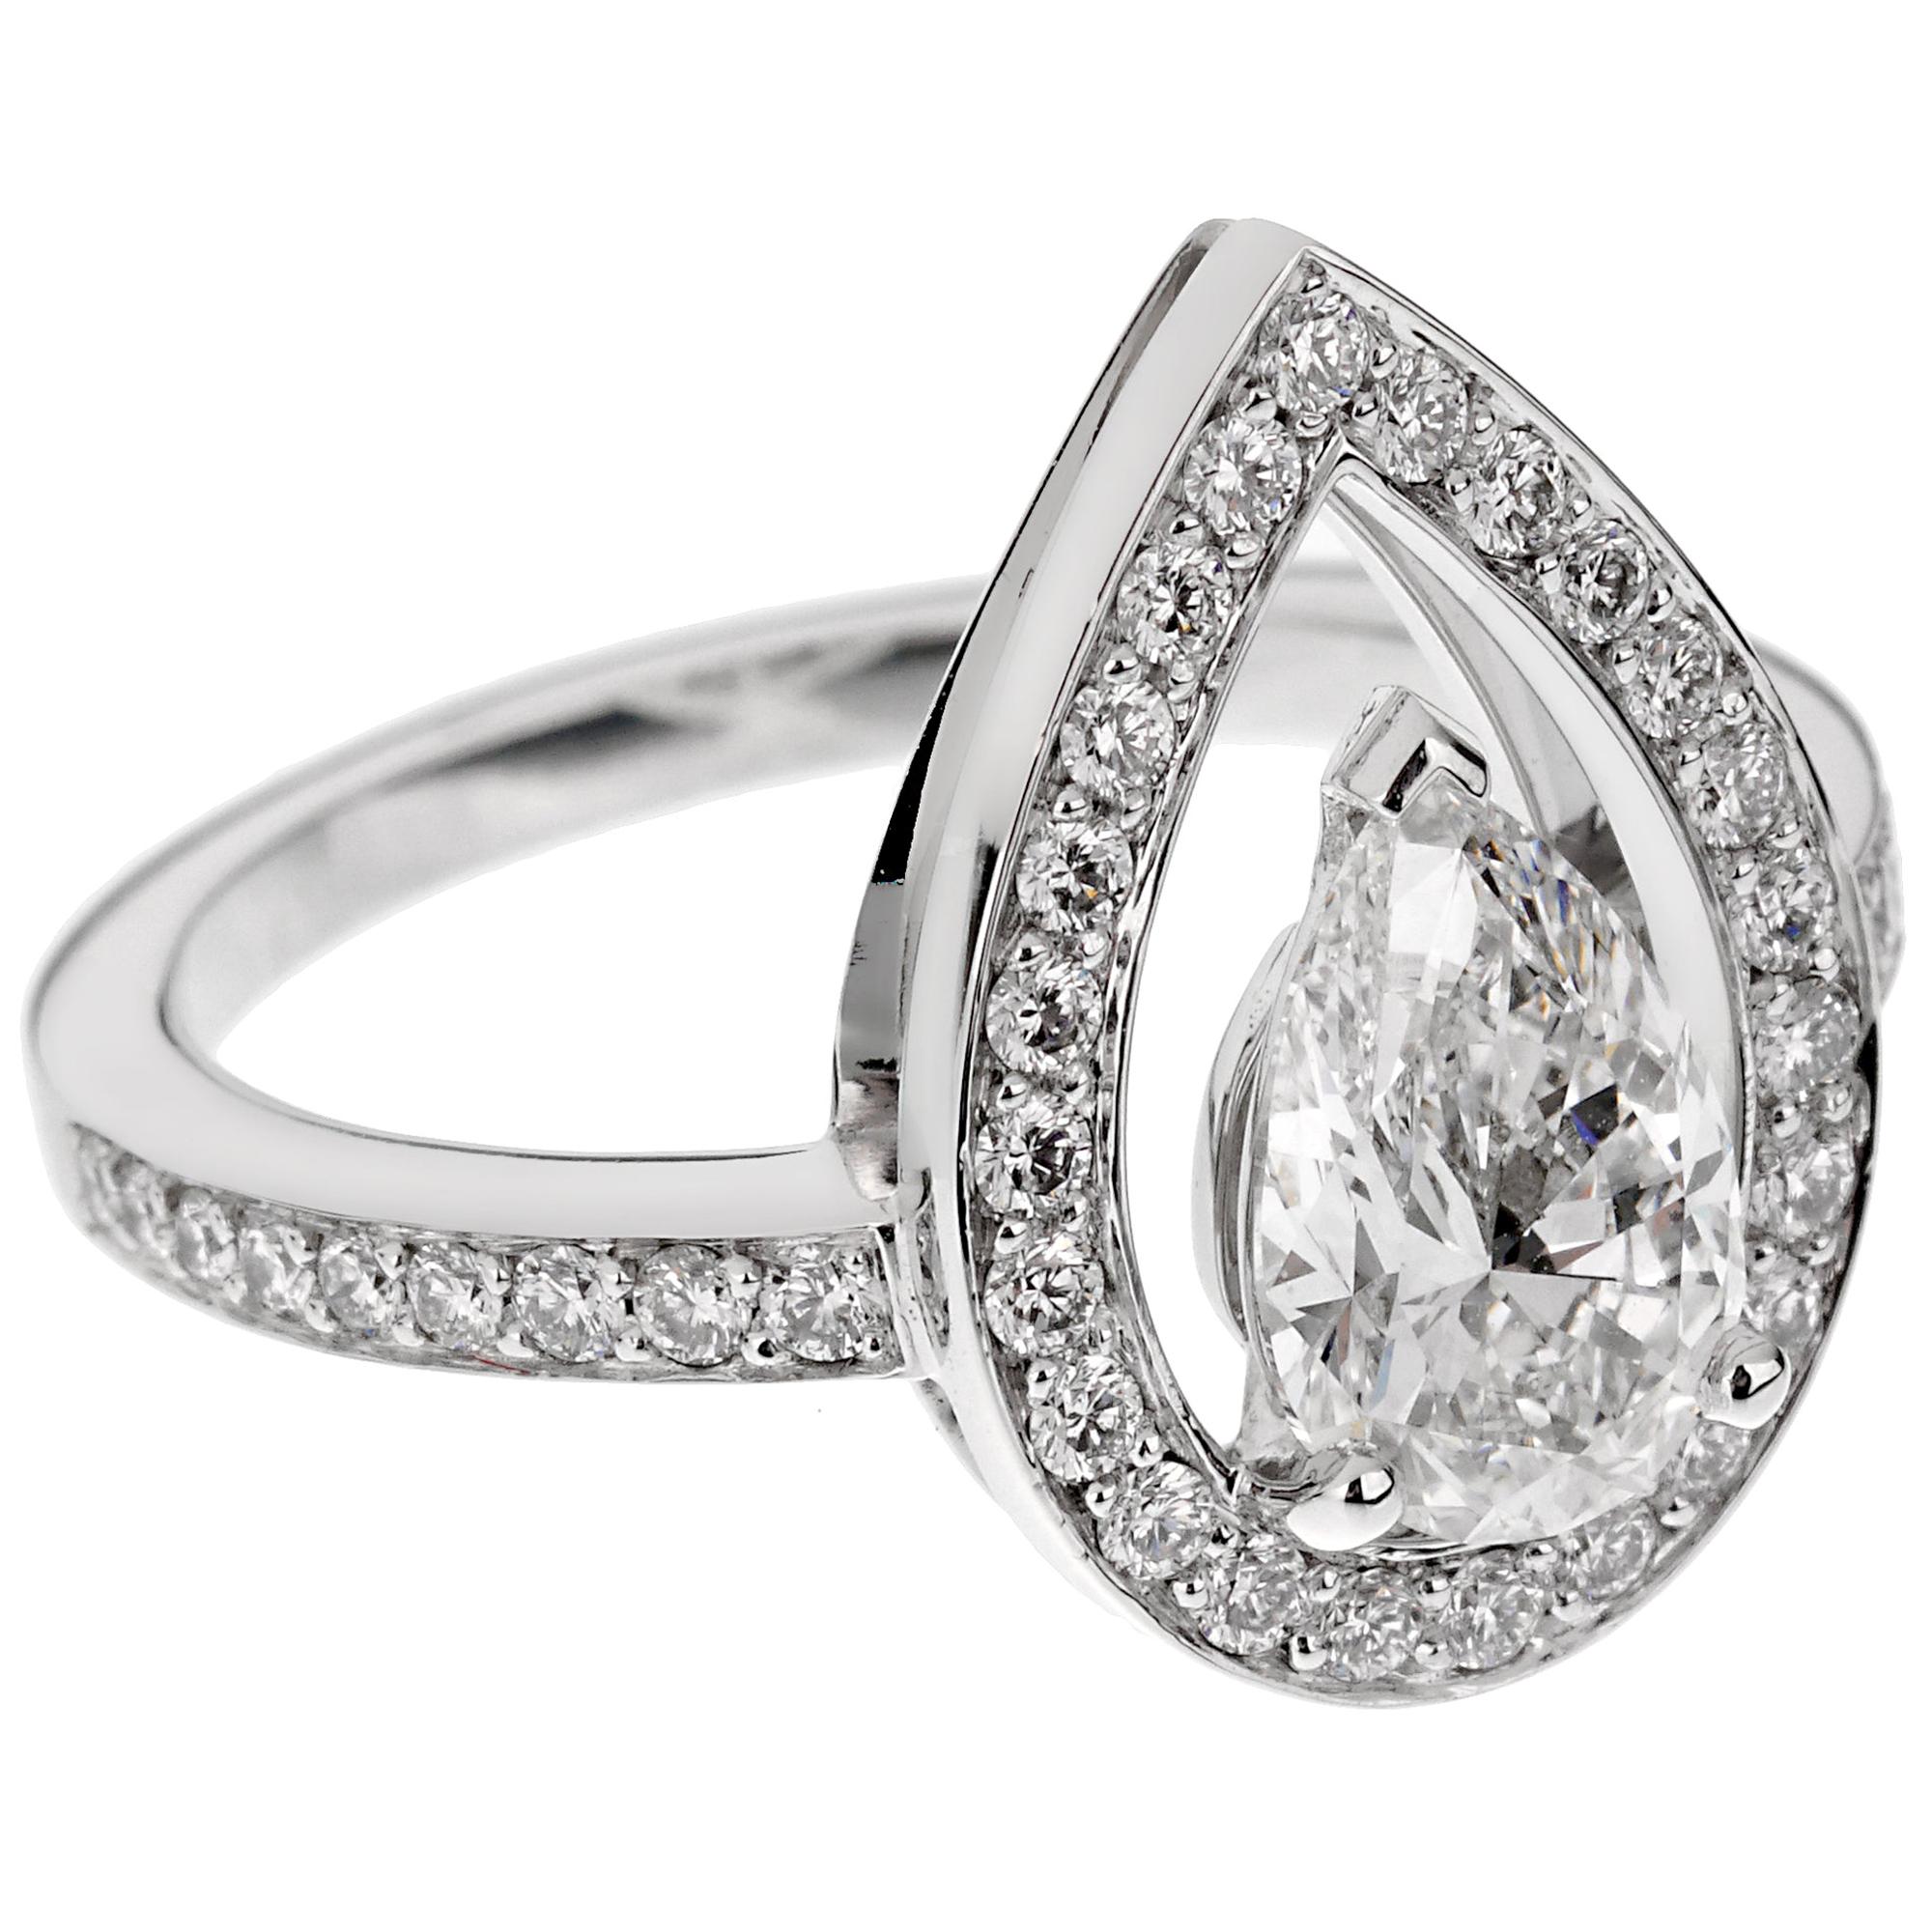 Fred of Paris Lovelight 1.48 Carat Pear Diamond Engagement Ring